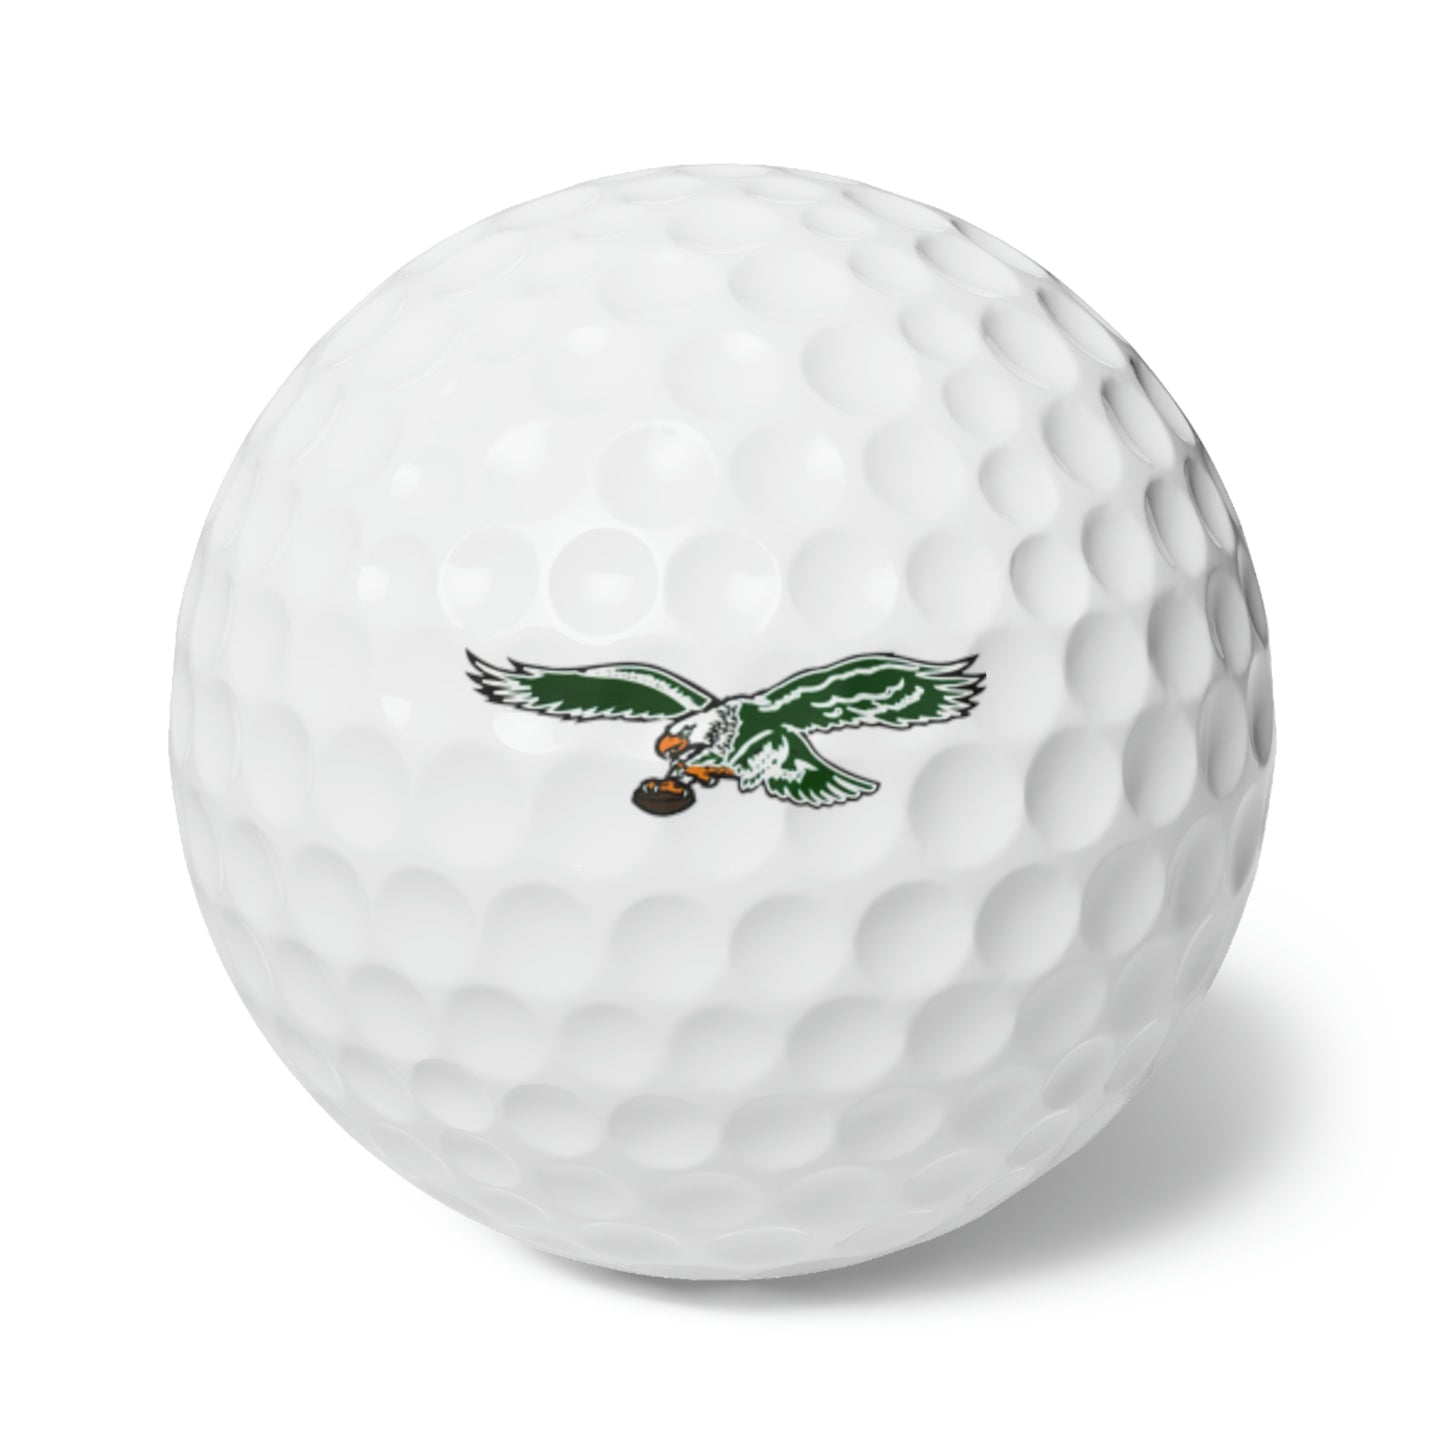 Retro Philadelphia Eagles logo Golf Balls, 6pcs